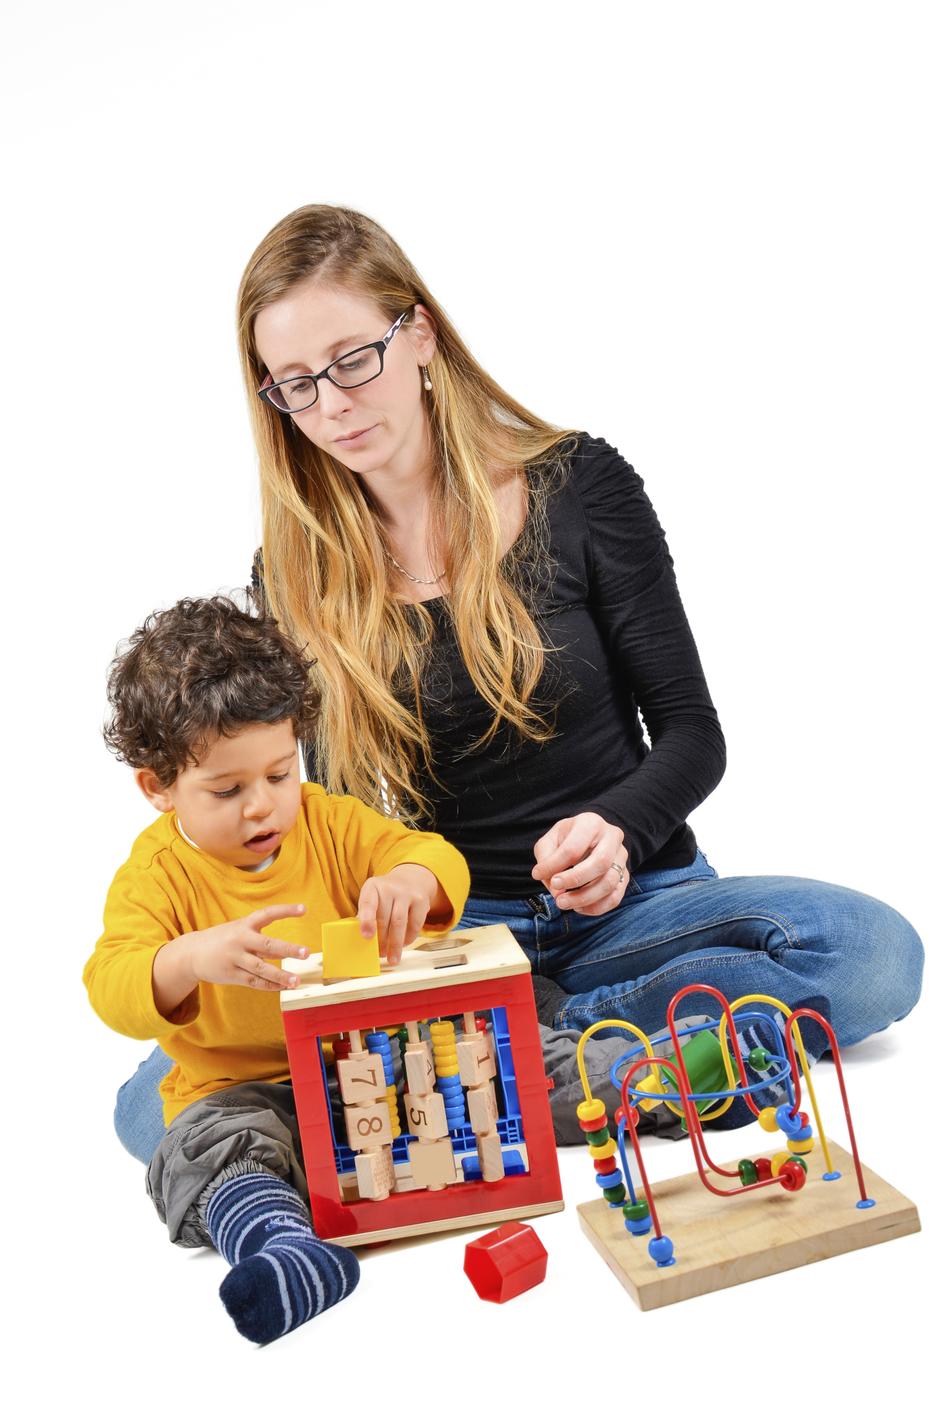 terapija igrom igra dijete | Author: Thinkstock